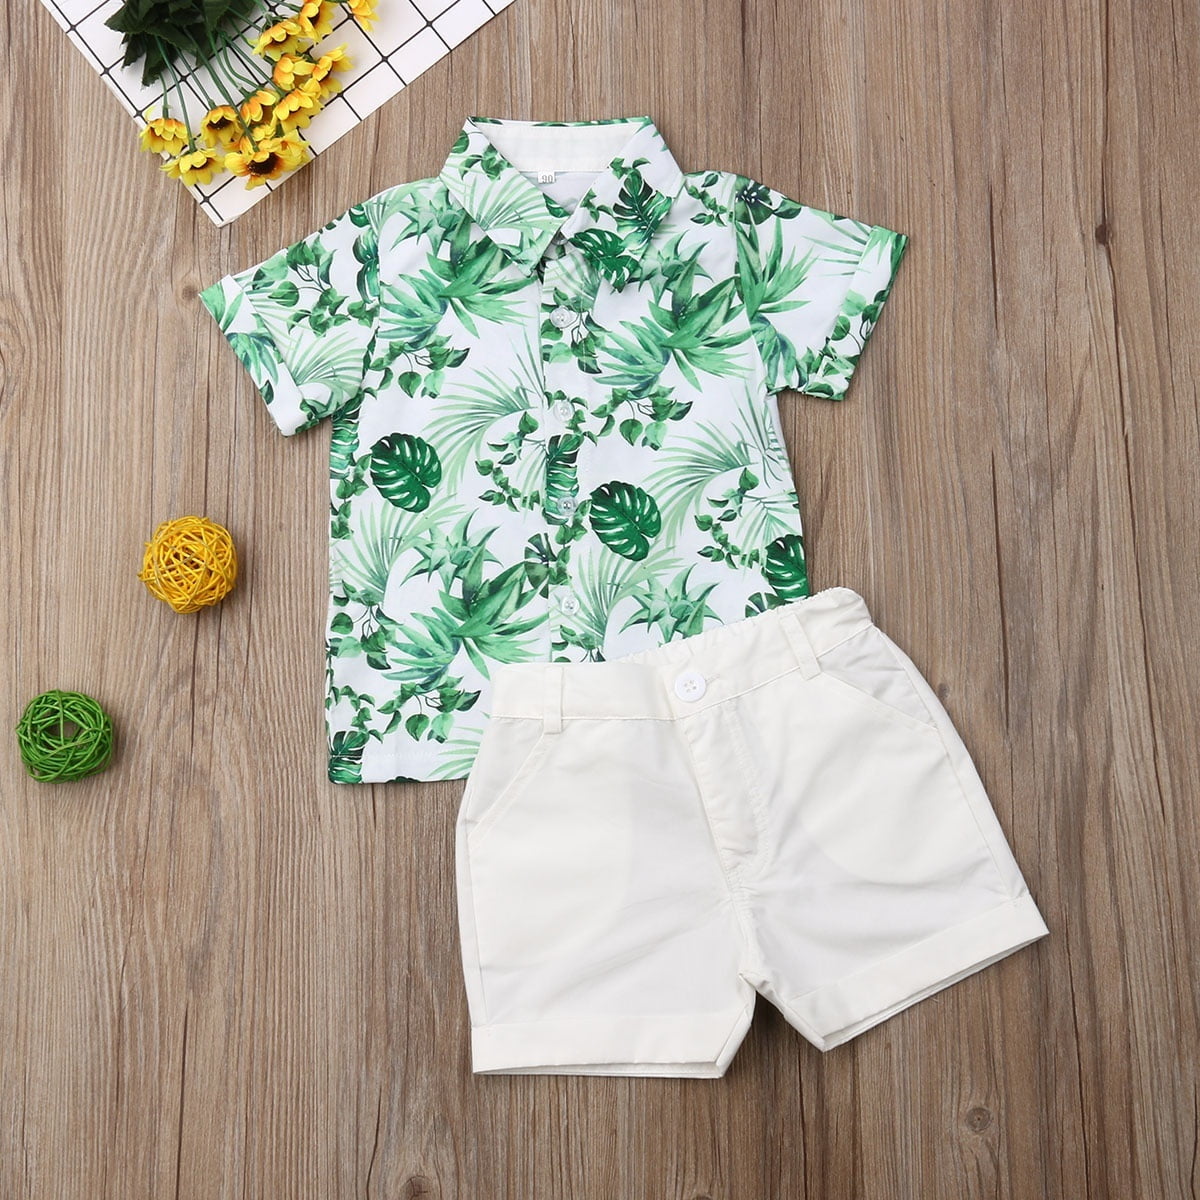 UNICEF Market  Men's Short Sleeved Green Cotton Batik Shirt from Bali -  Green Leaf Shadows